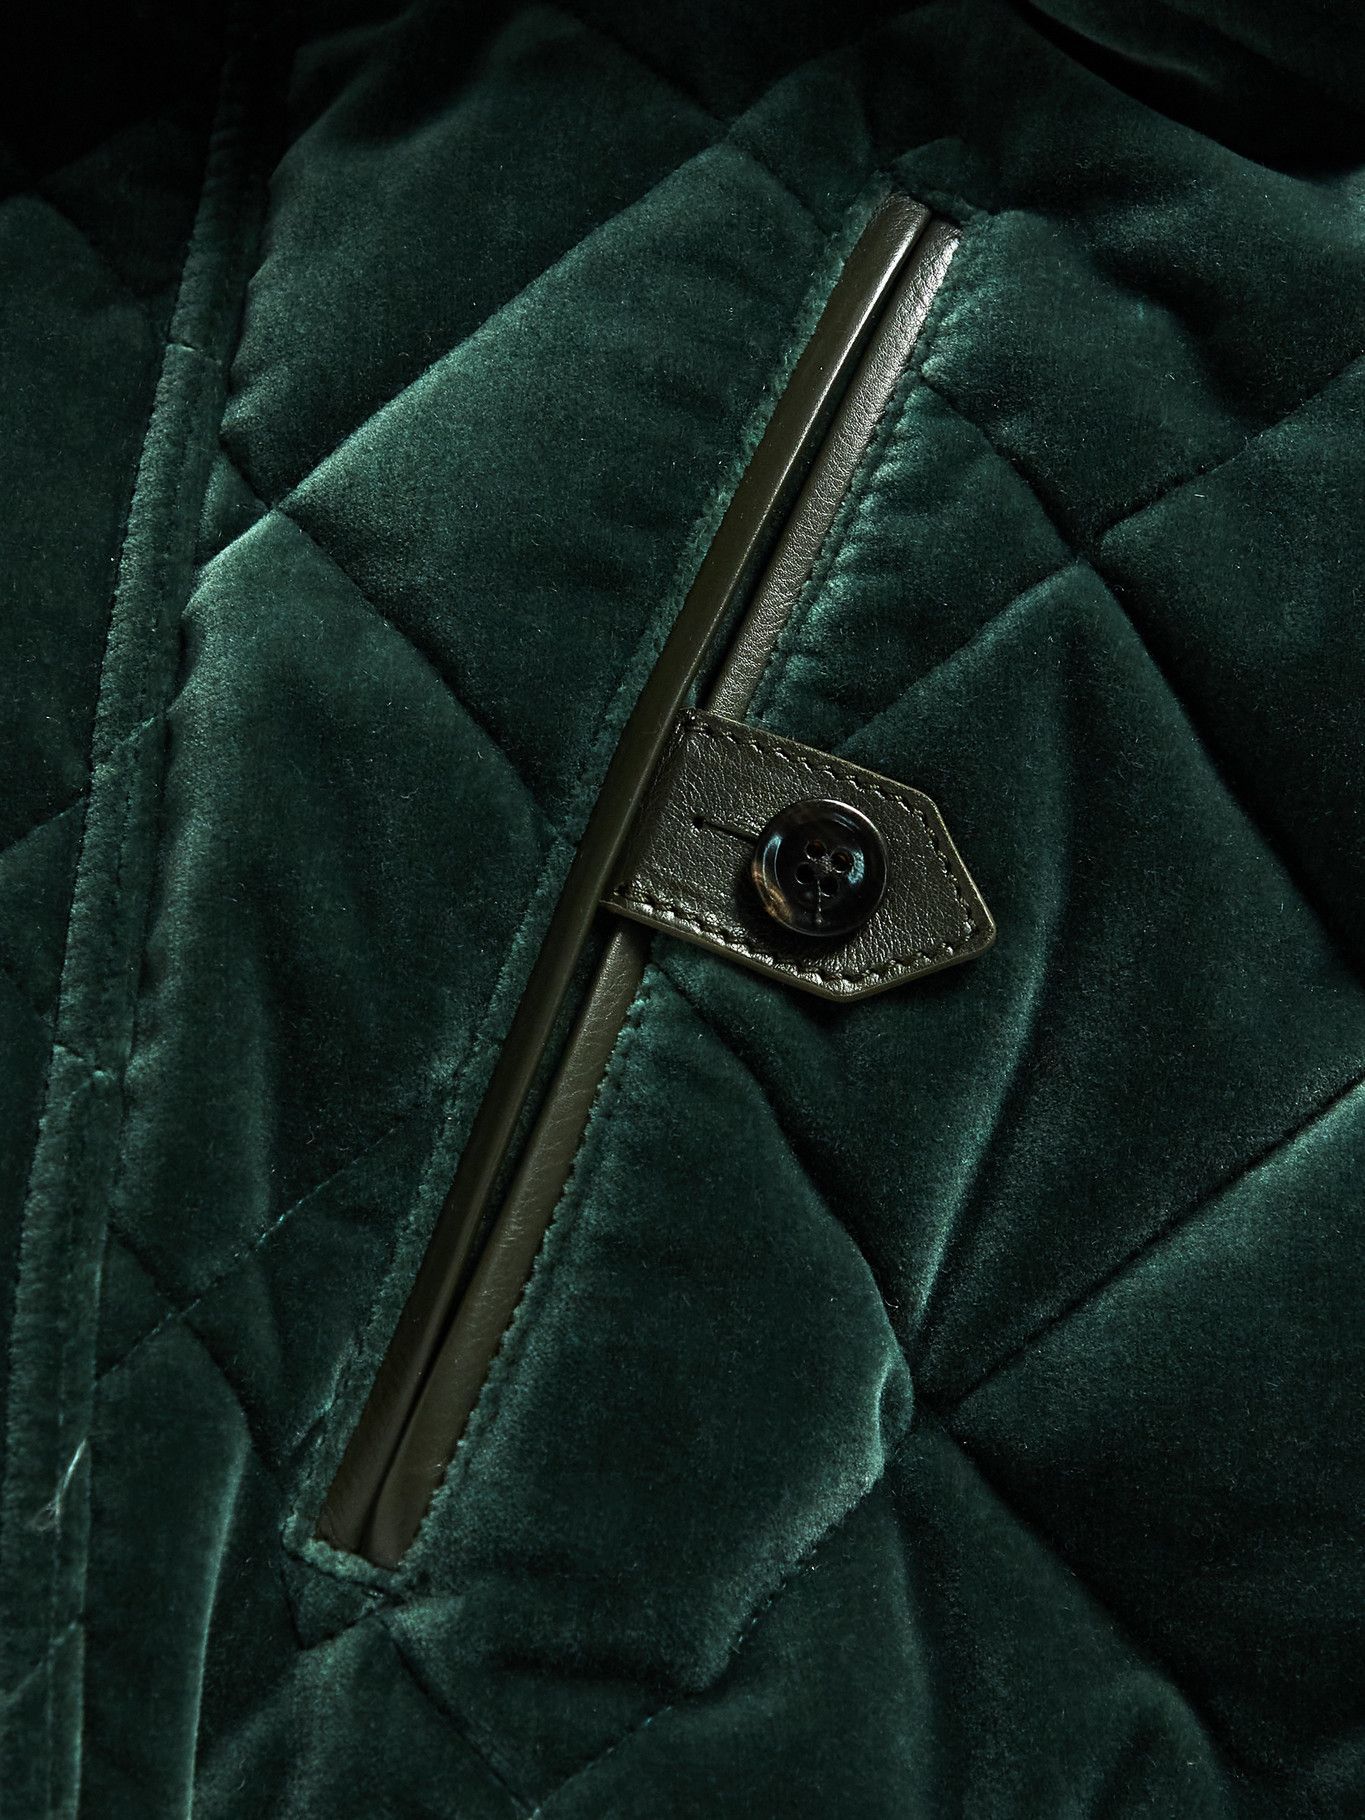 TOM FORD - Leather-Trimmed Quilted Cotton-Velvet Blouson Jacket 